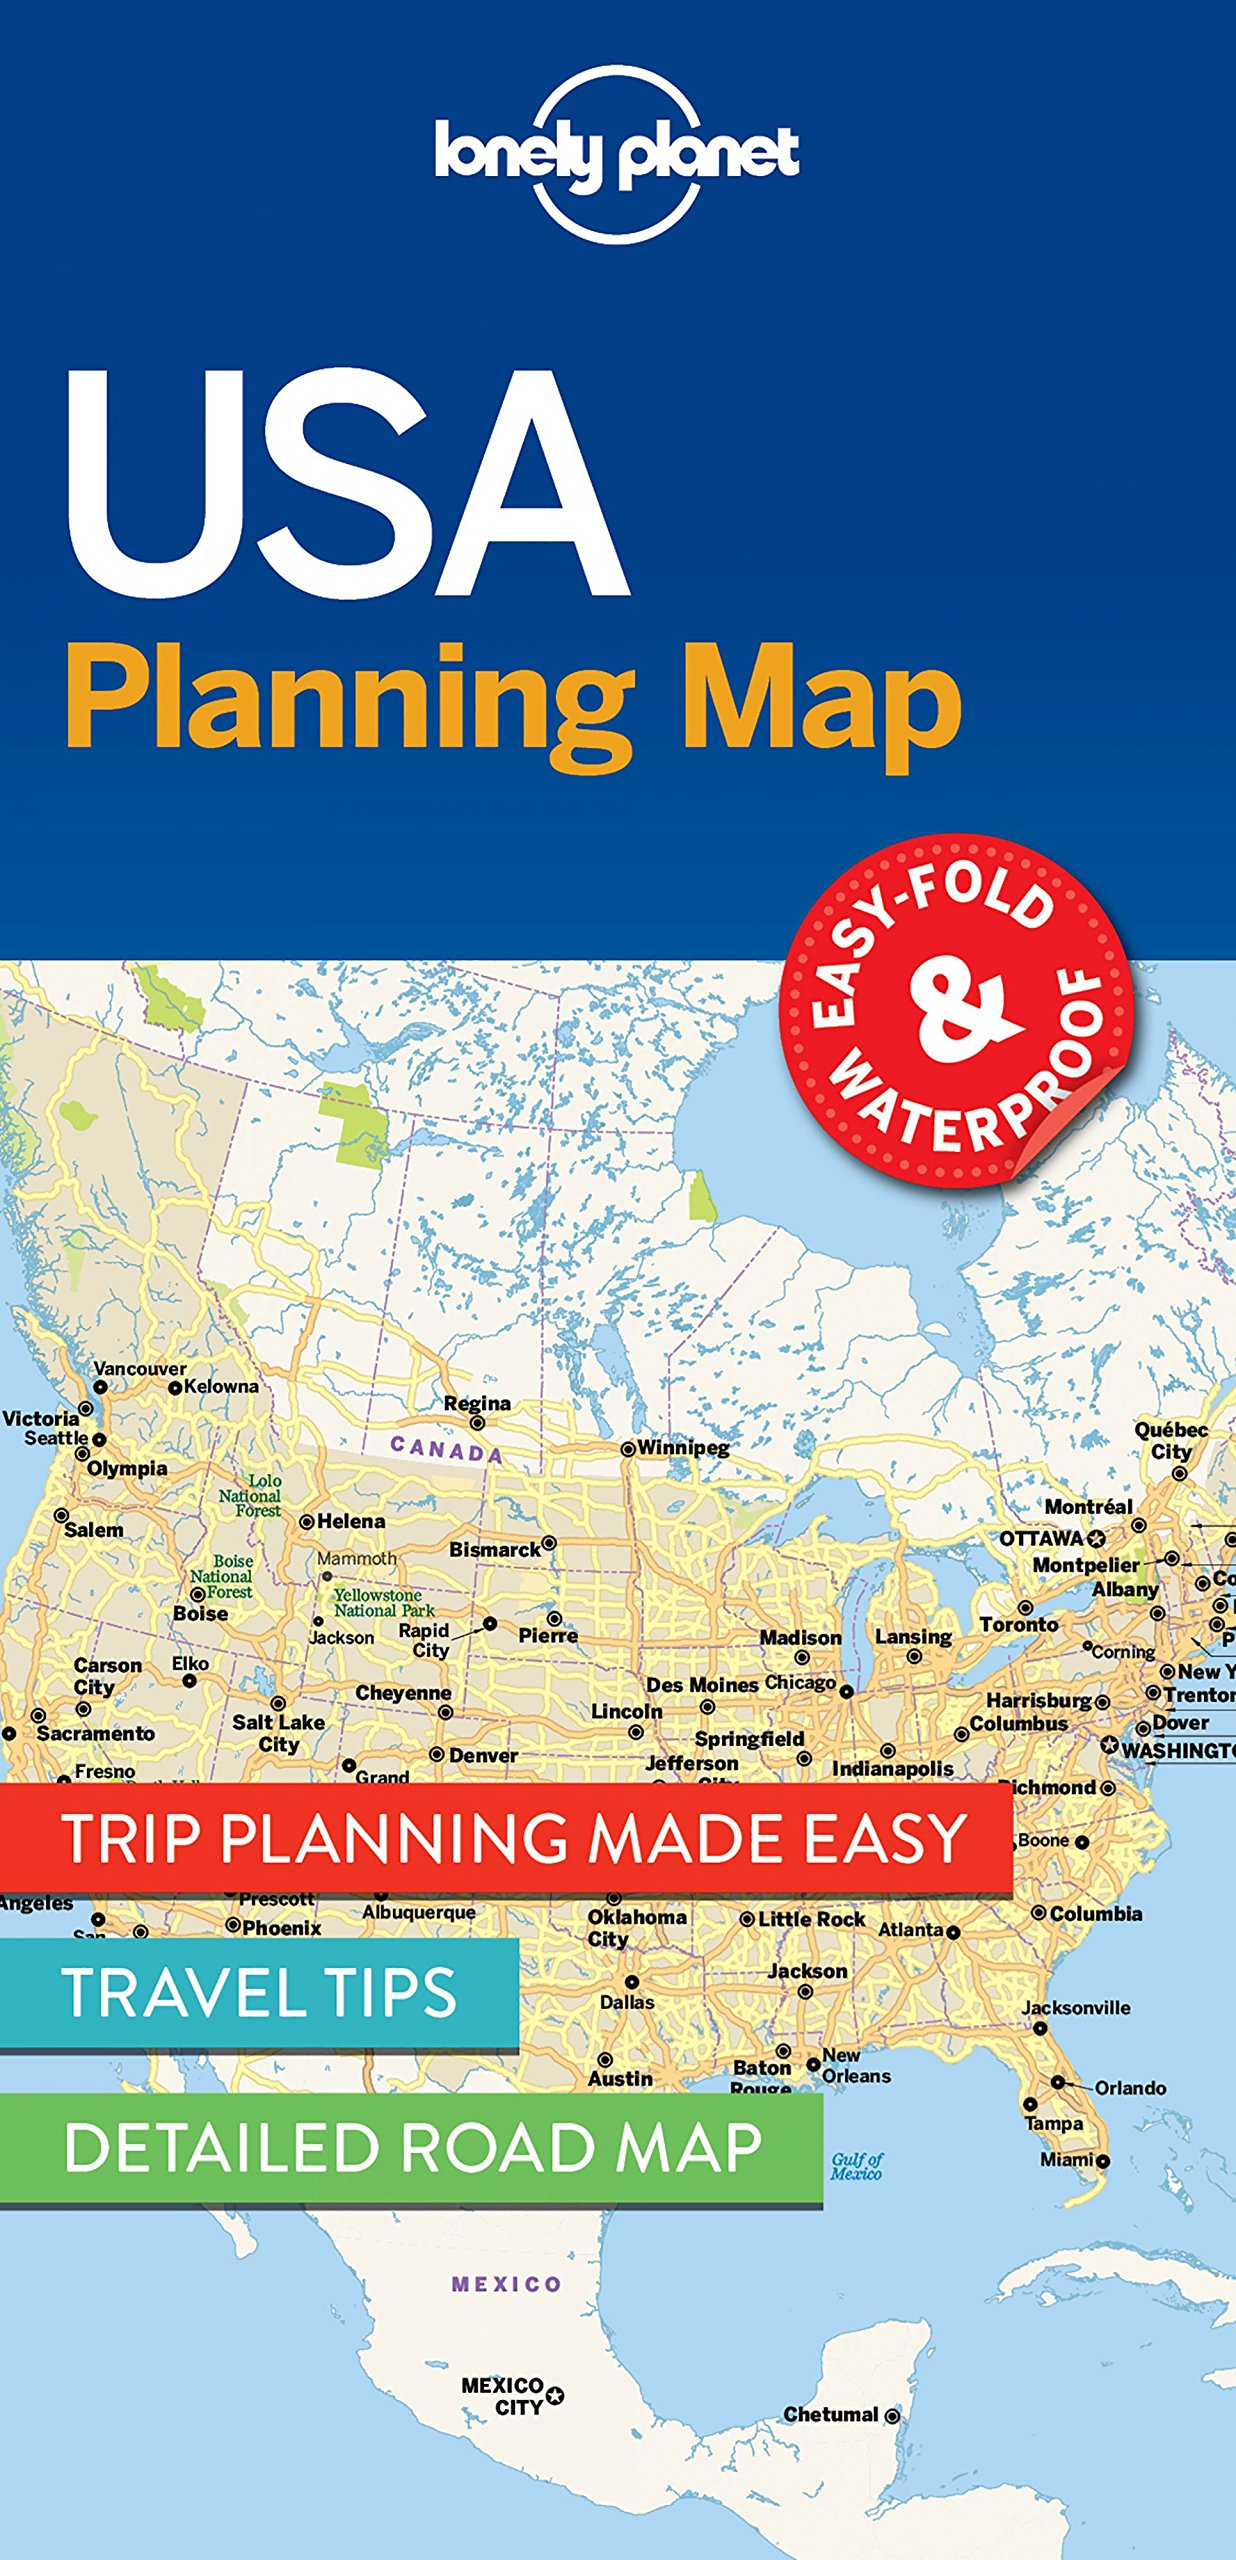 Online bestellen: Wegenkaart - landkaart Planning Map USA | Lonely Planet